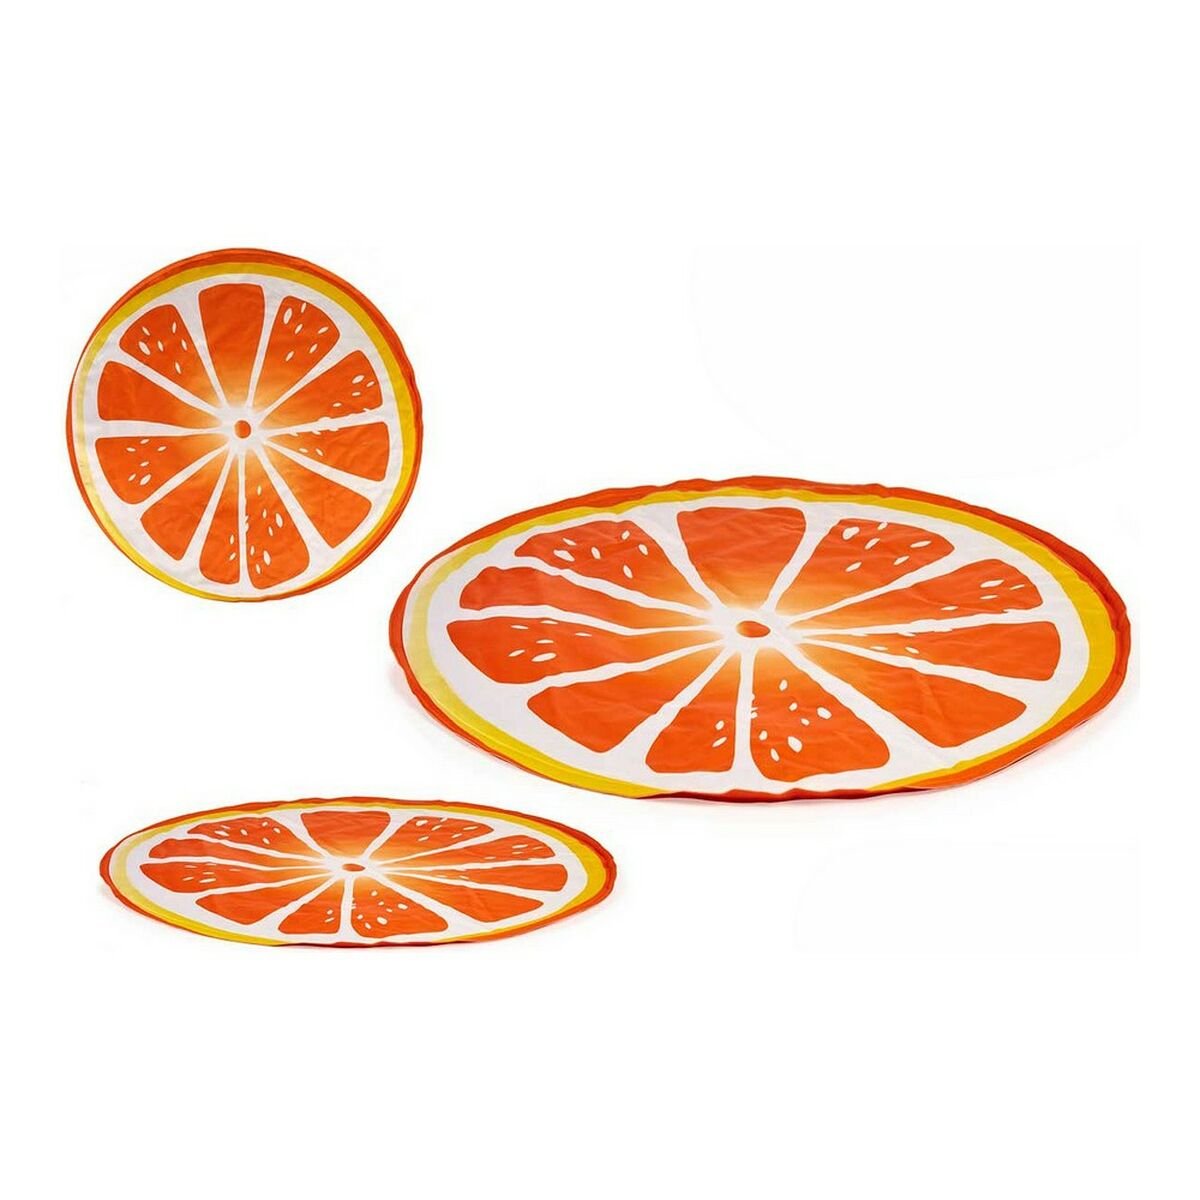 Kylmatta apelsin | Gel-kylande | (60 x 1 x 60 cm)